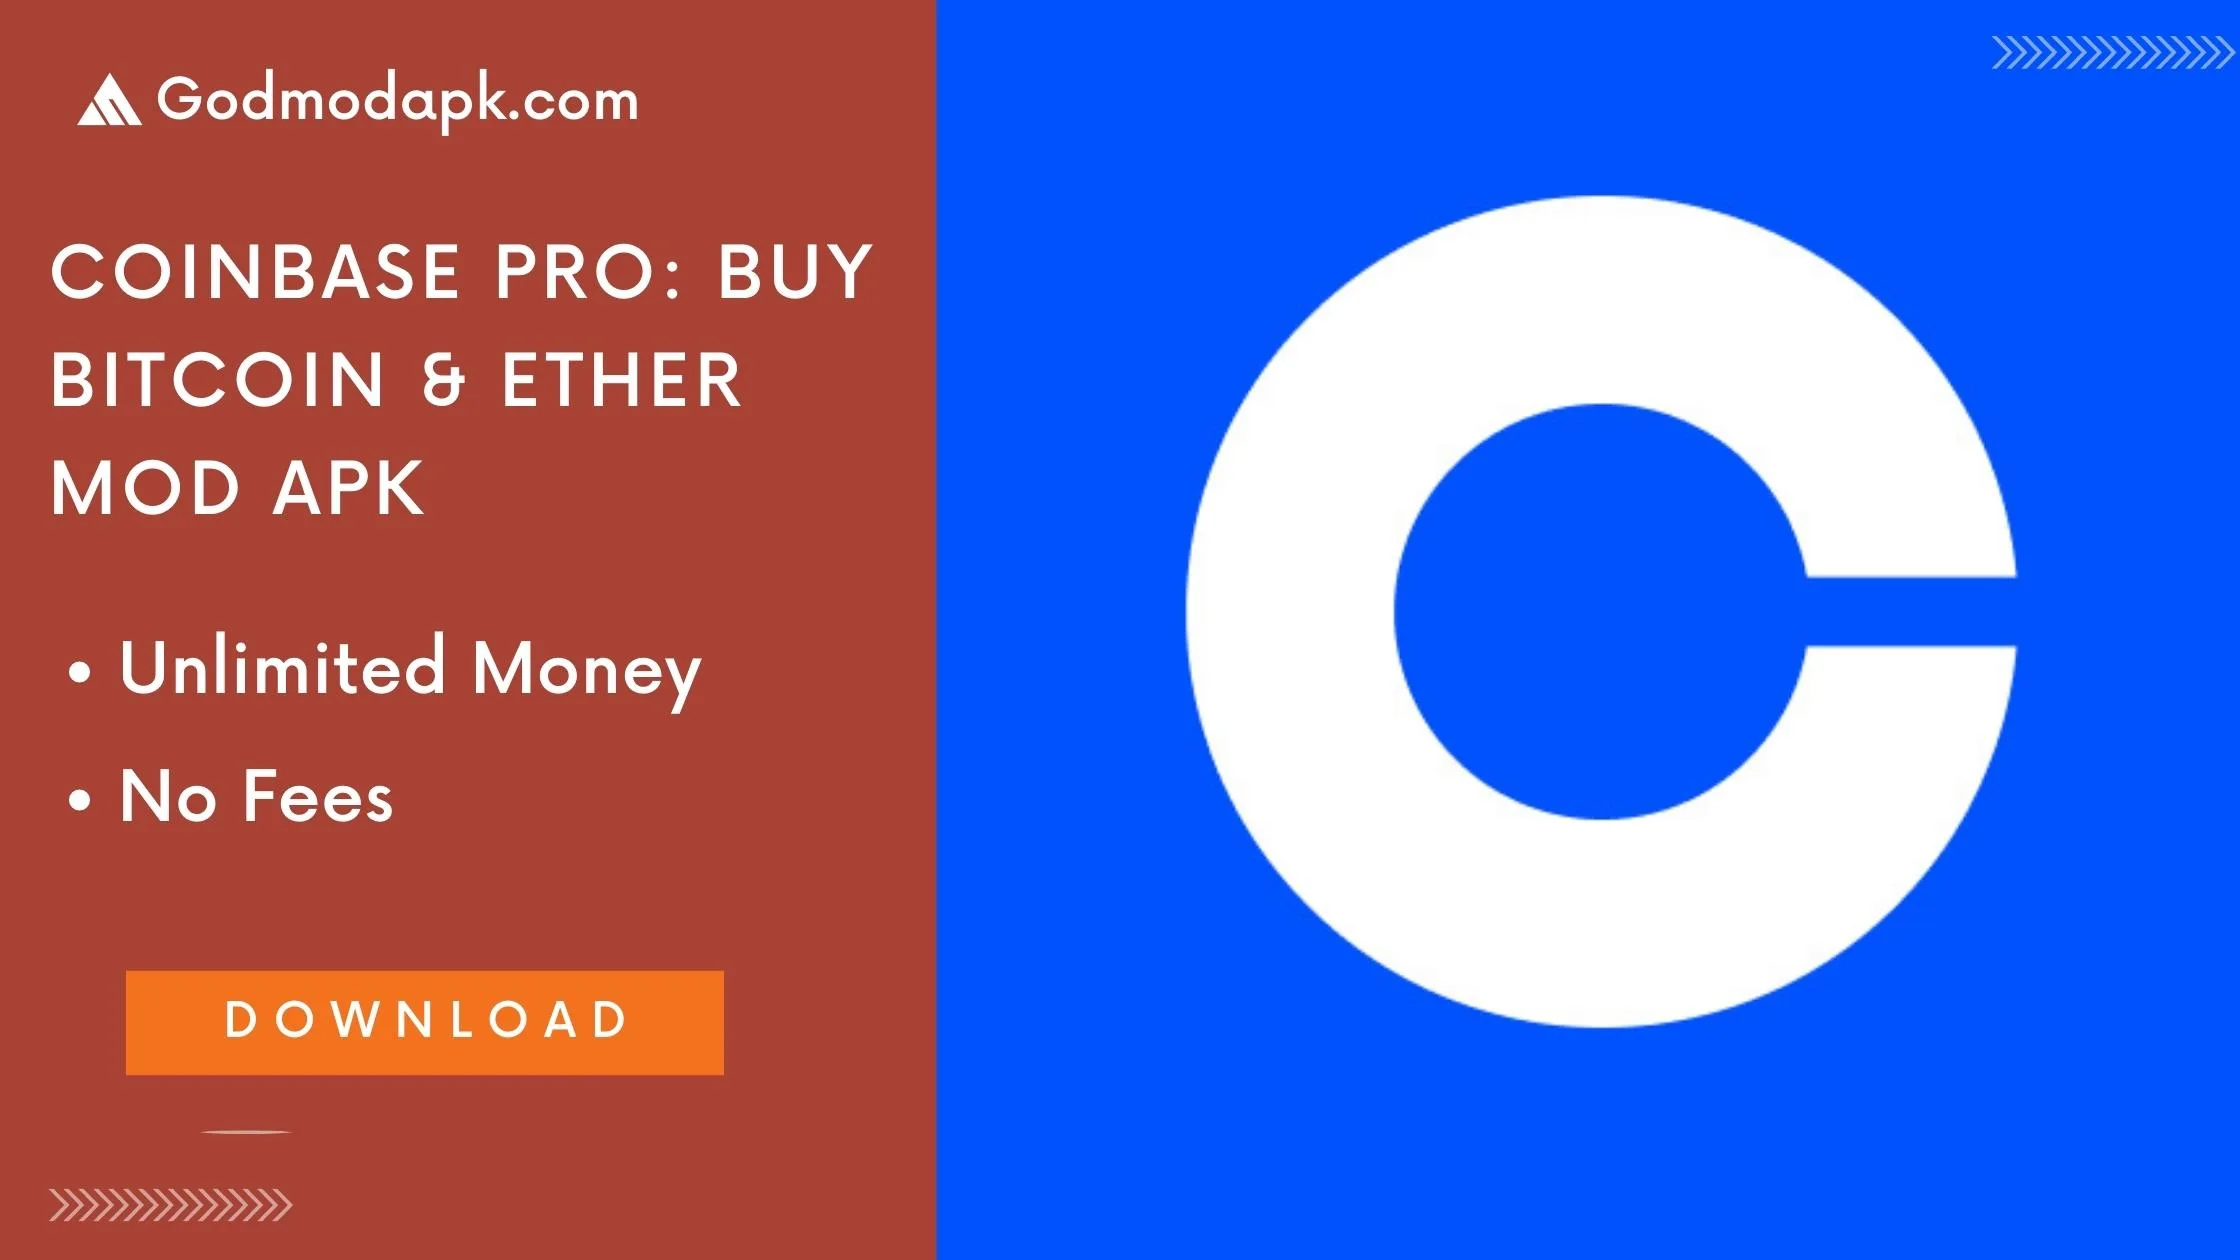 Coinbase Pro Buy Bitcoin & Ether MOD APK Download